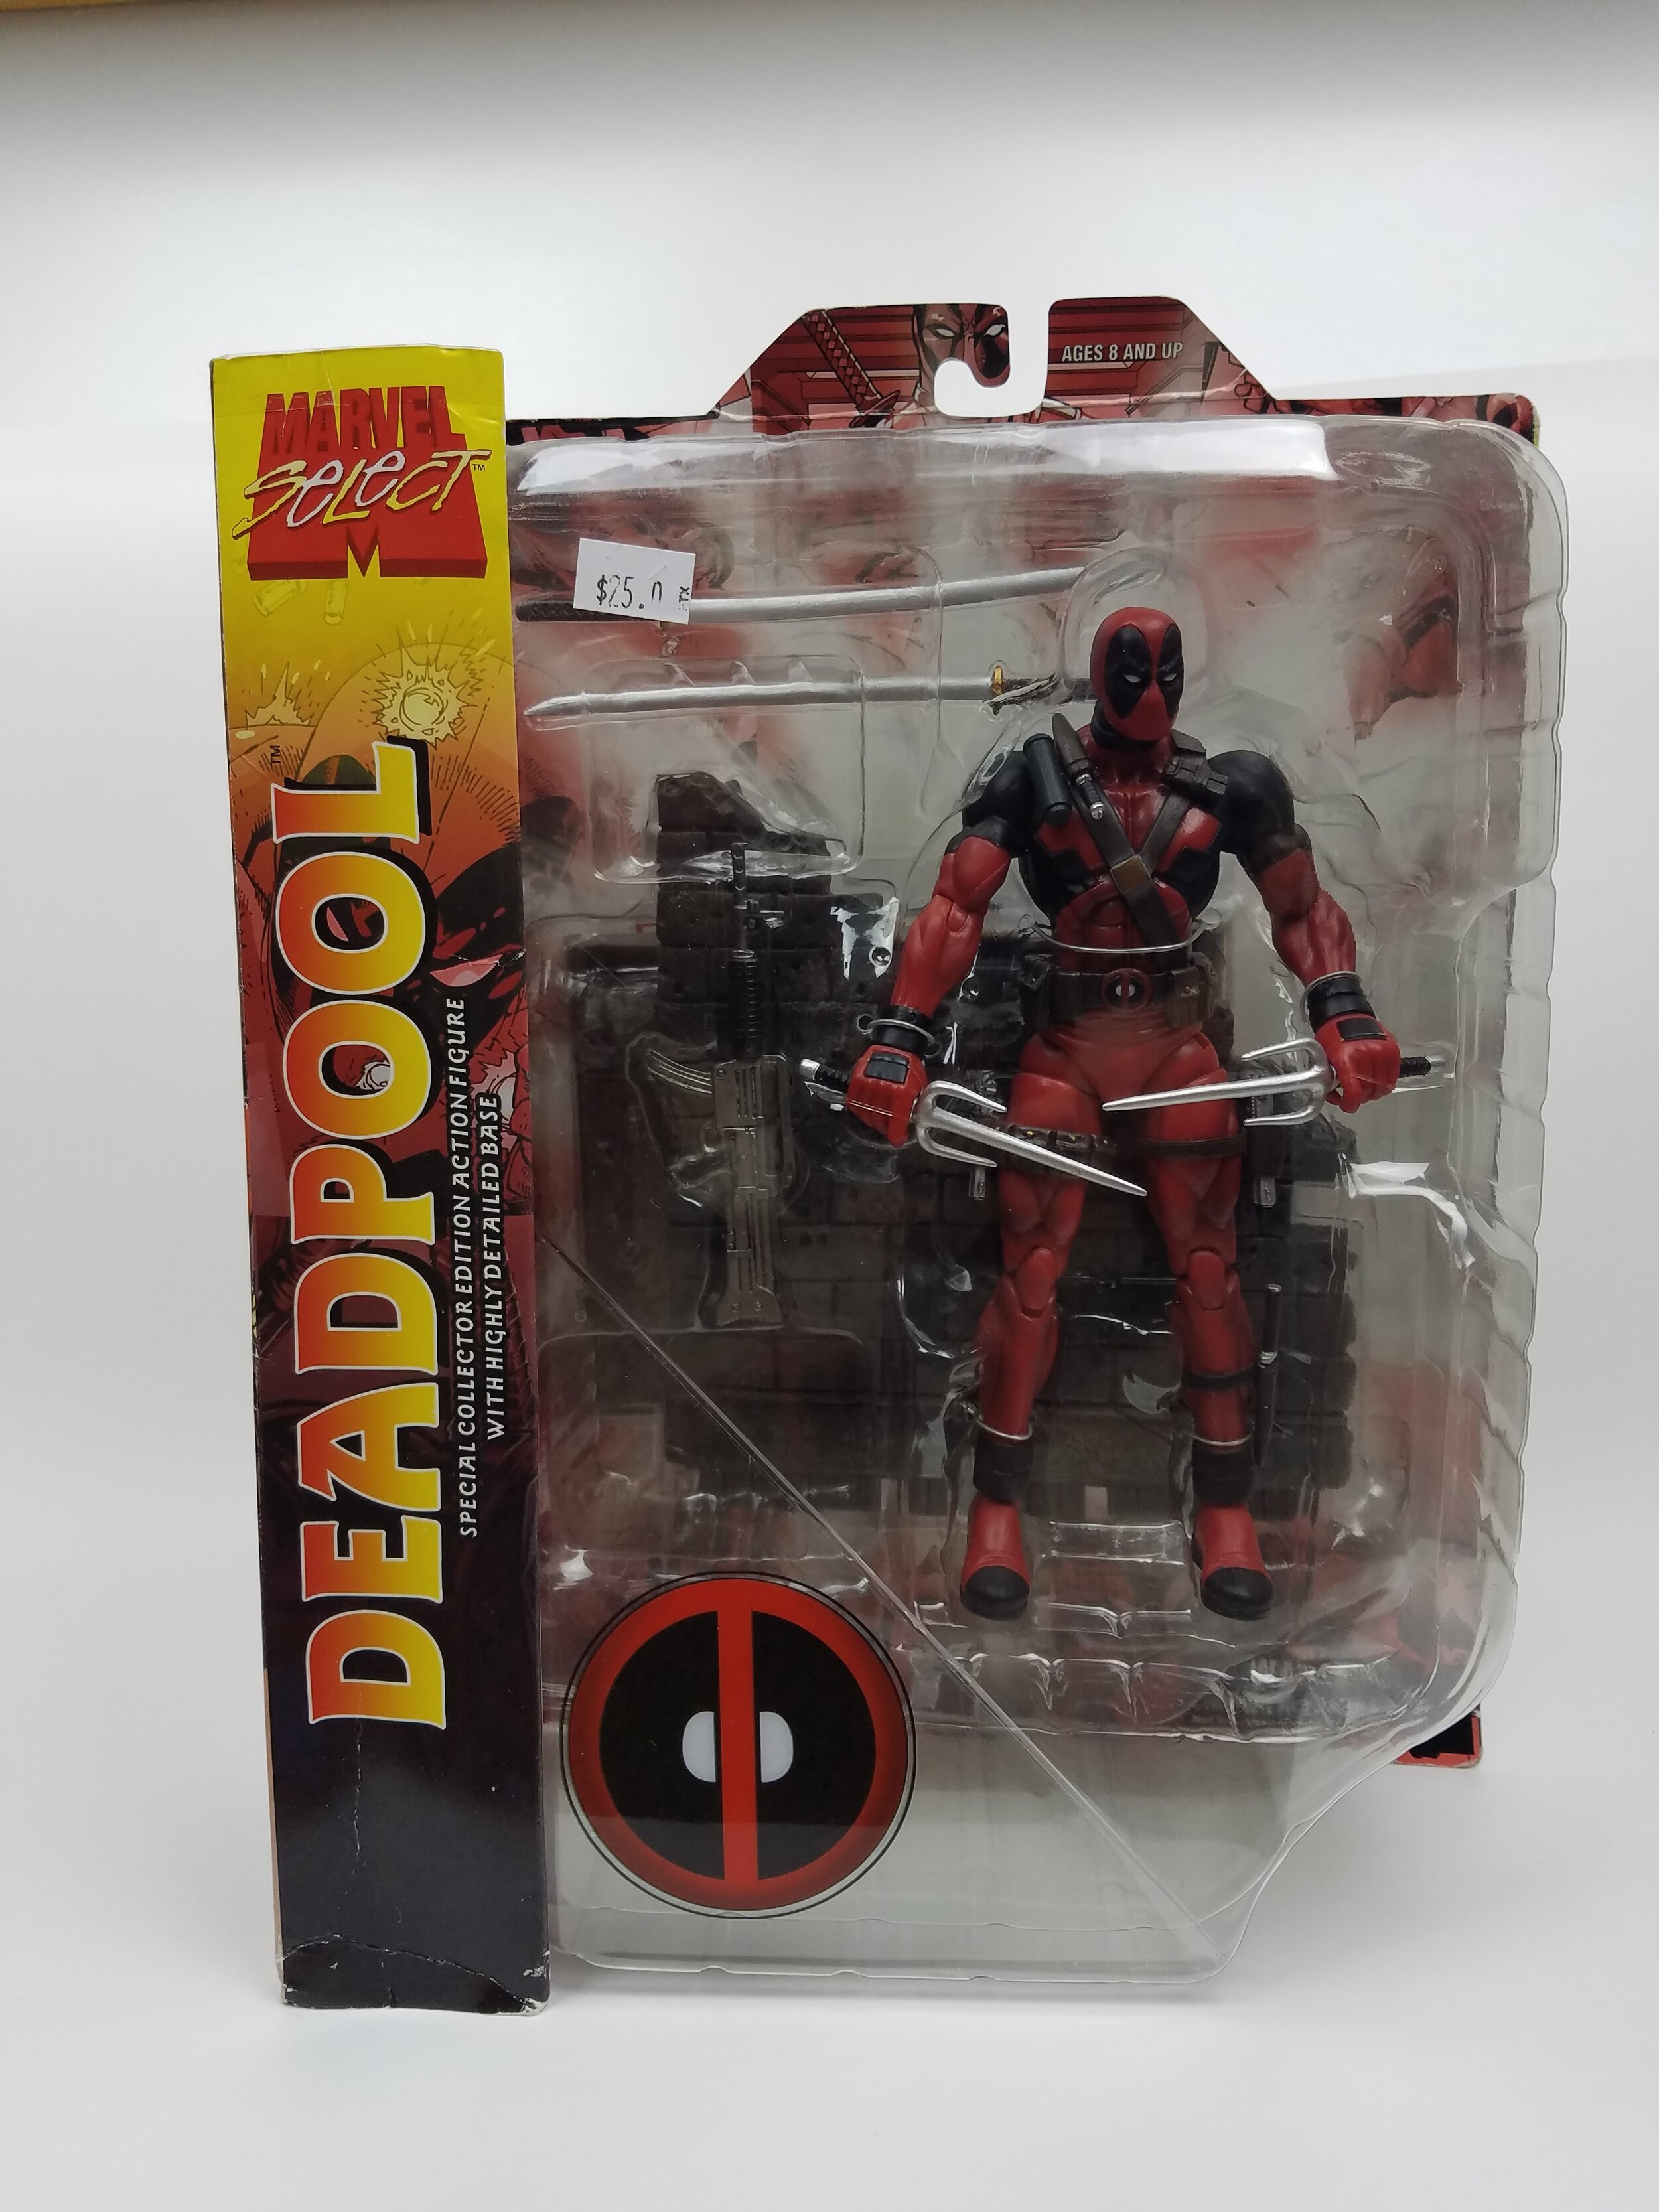 deadpool special collector edition action figure